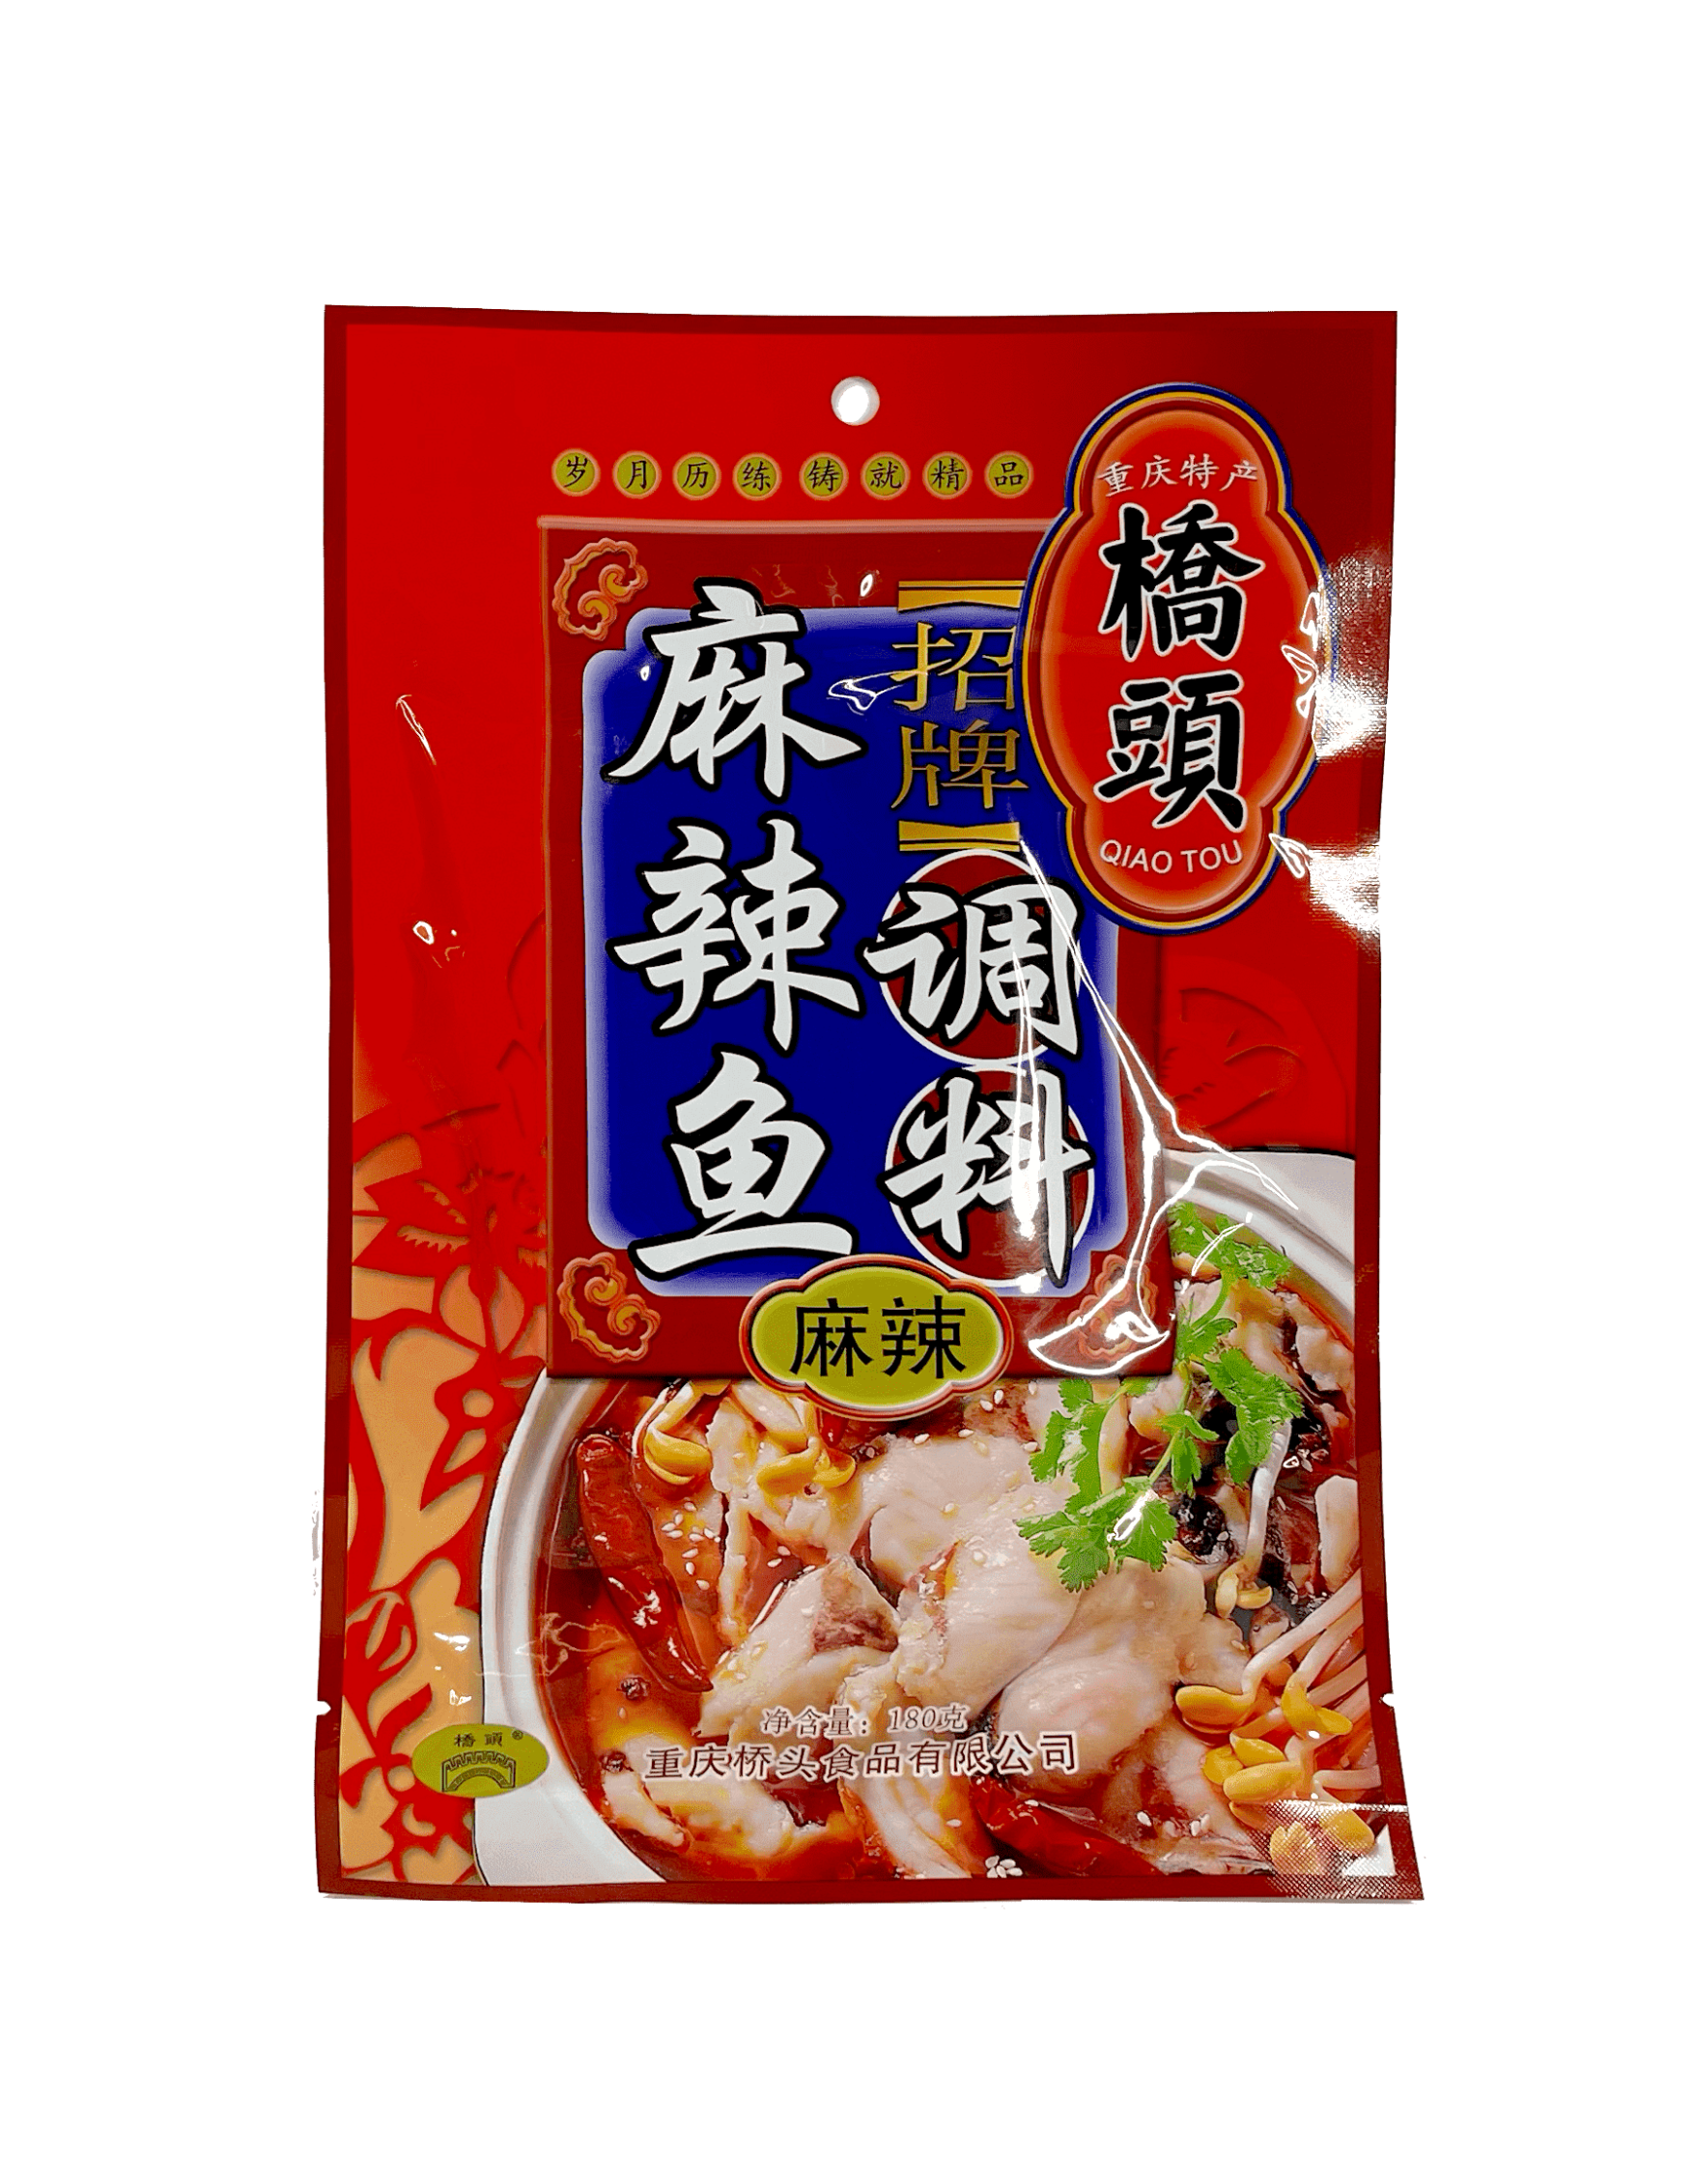 Hotpot Krydda Hot/Spicy 180g Chongqing MLYTL Qiao Tou Kina